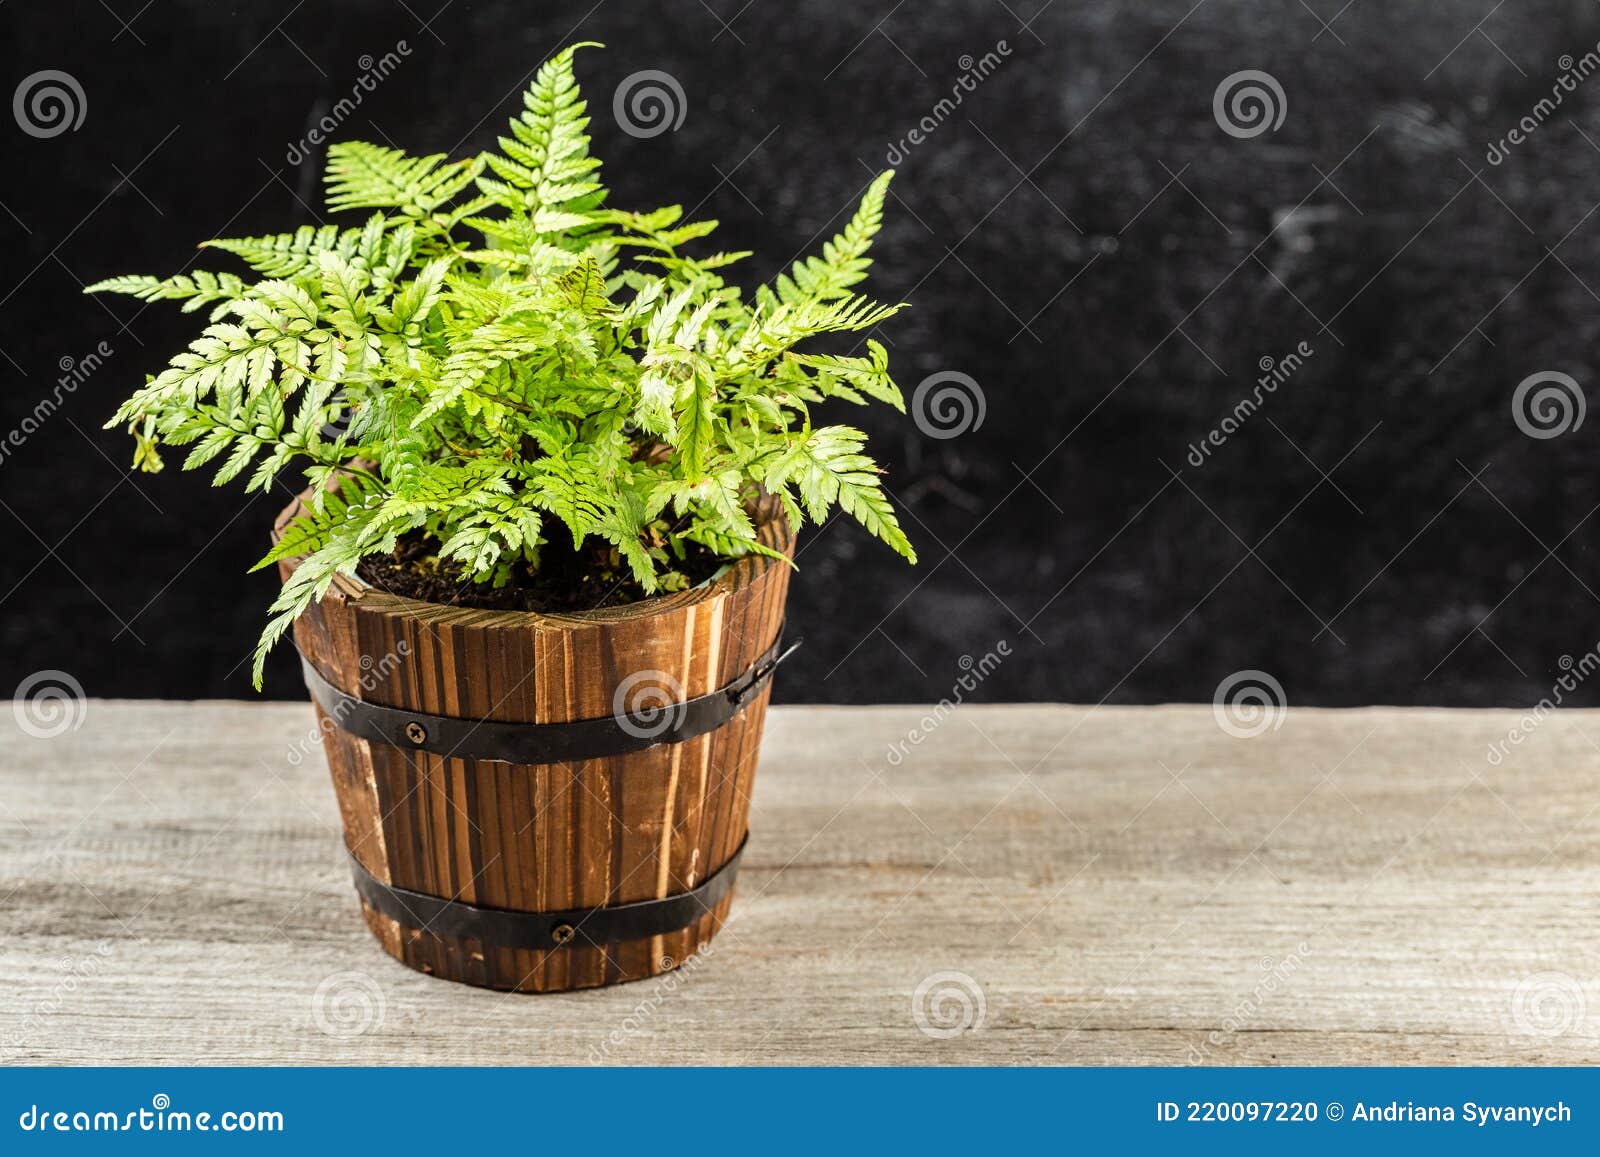 athyrium filix-femina, the lady fern in a pot